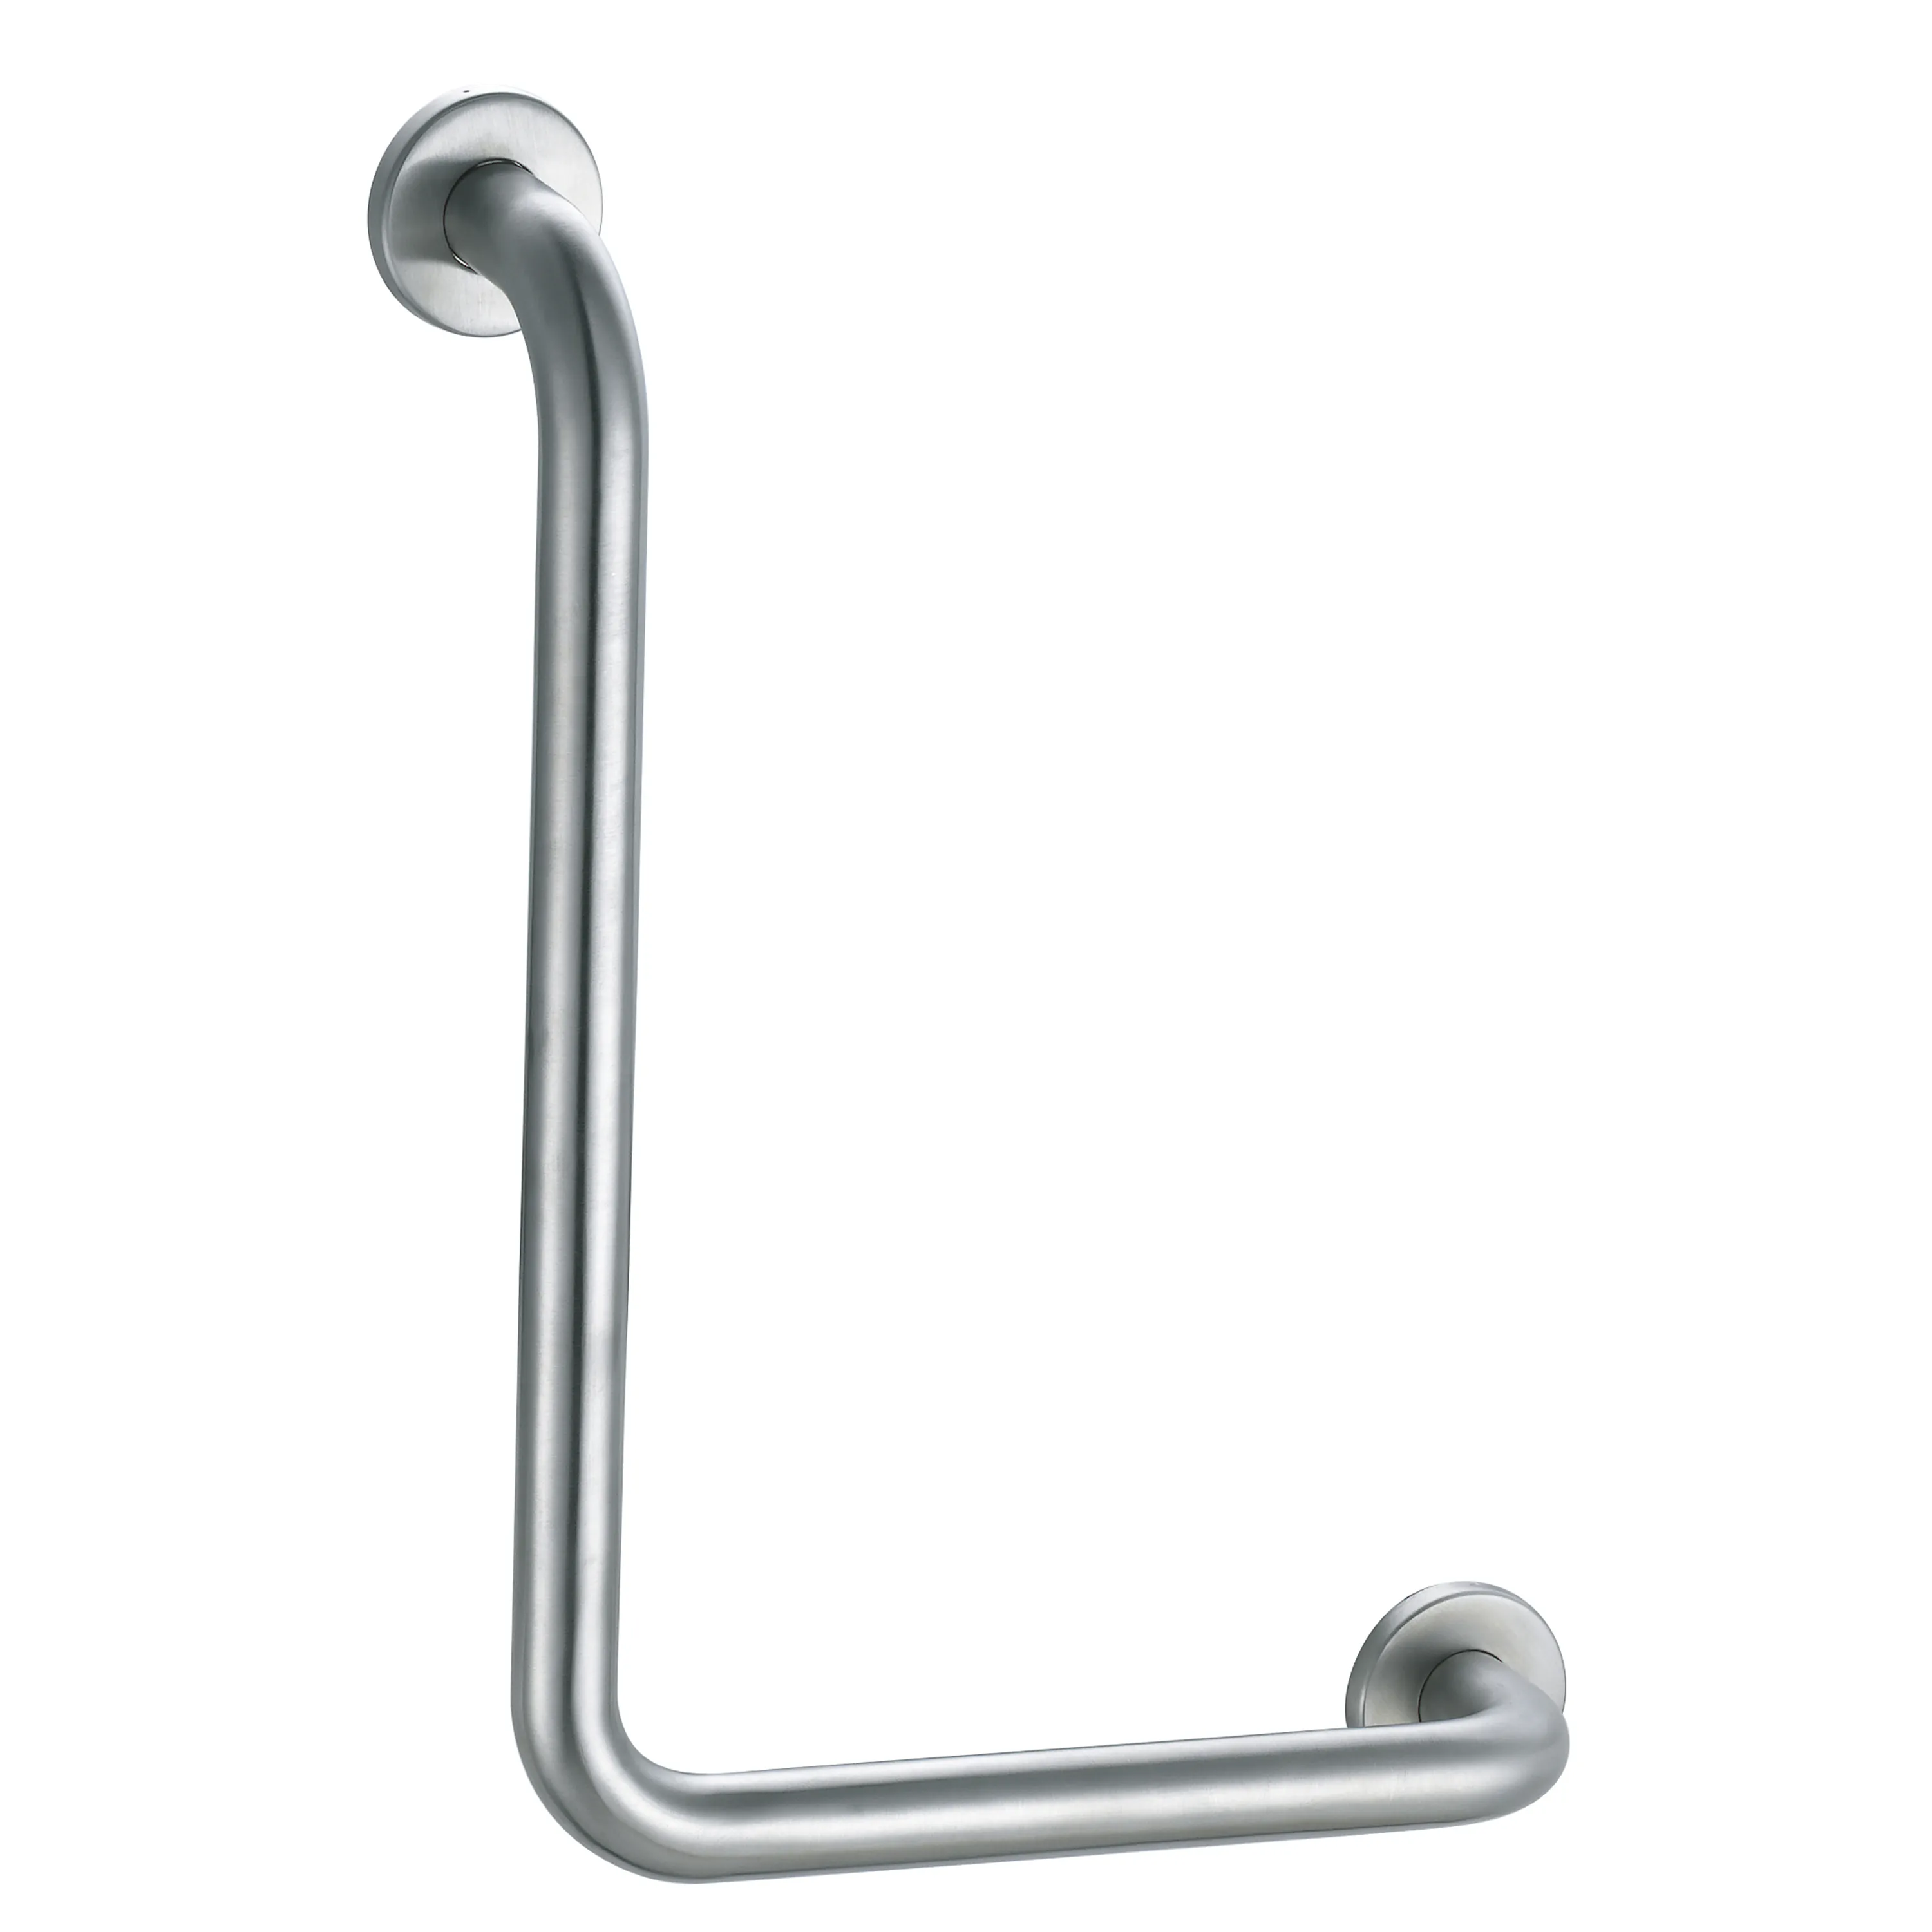 Quality 304 Stainless Steel L Shaped Toilet Handrail Grab Bar Disable Elderly Bathroom wall grab rails